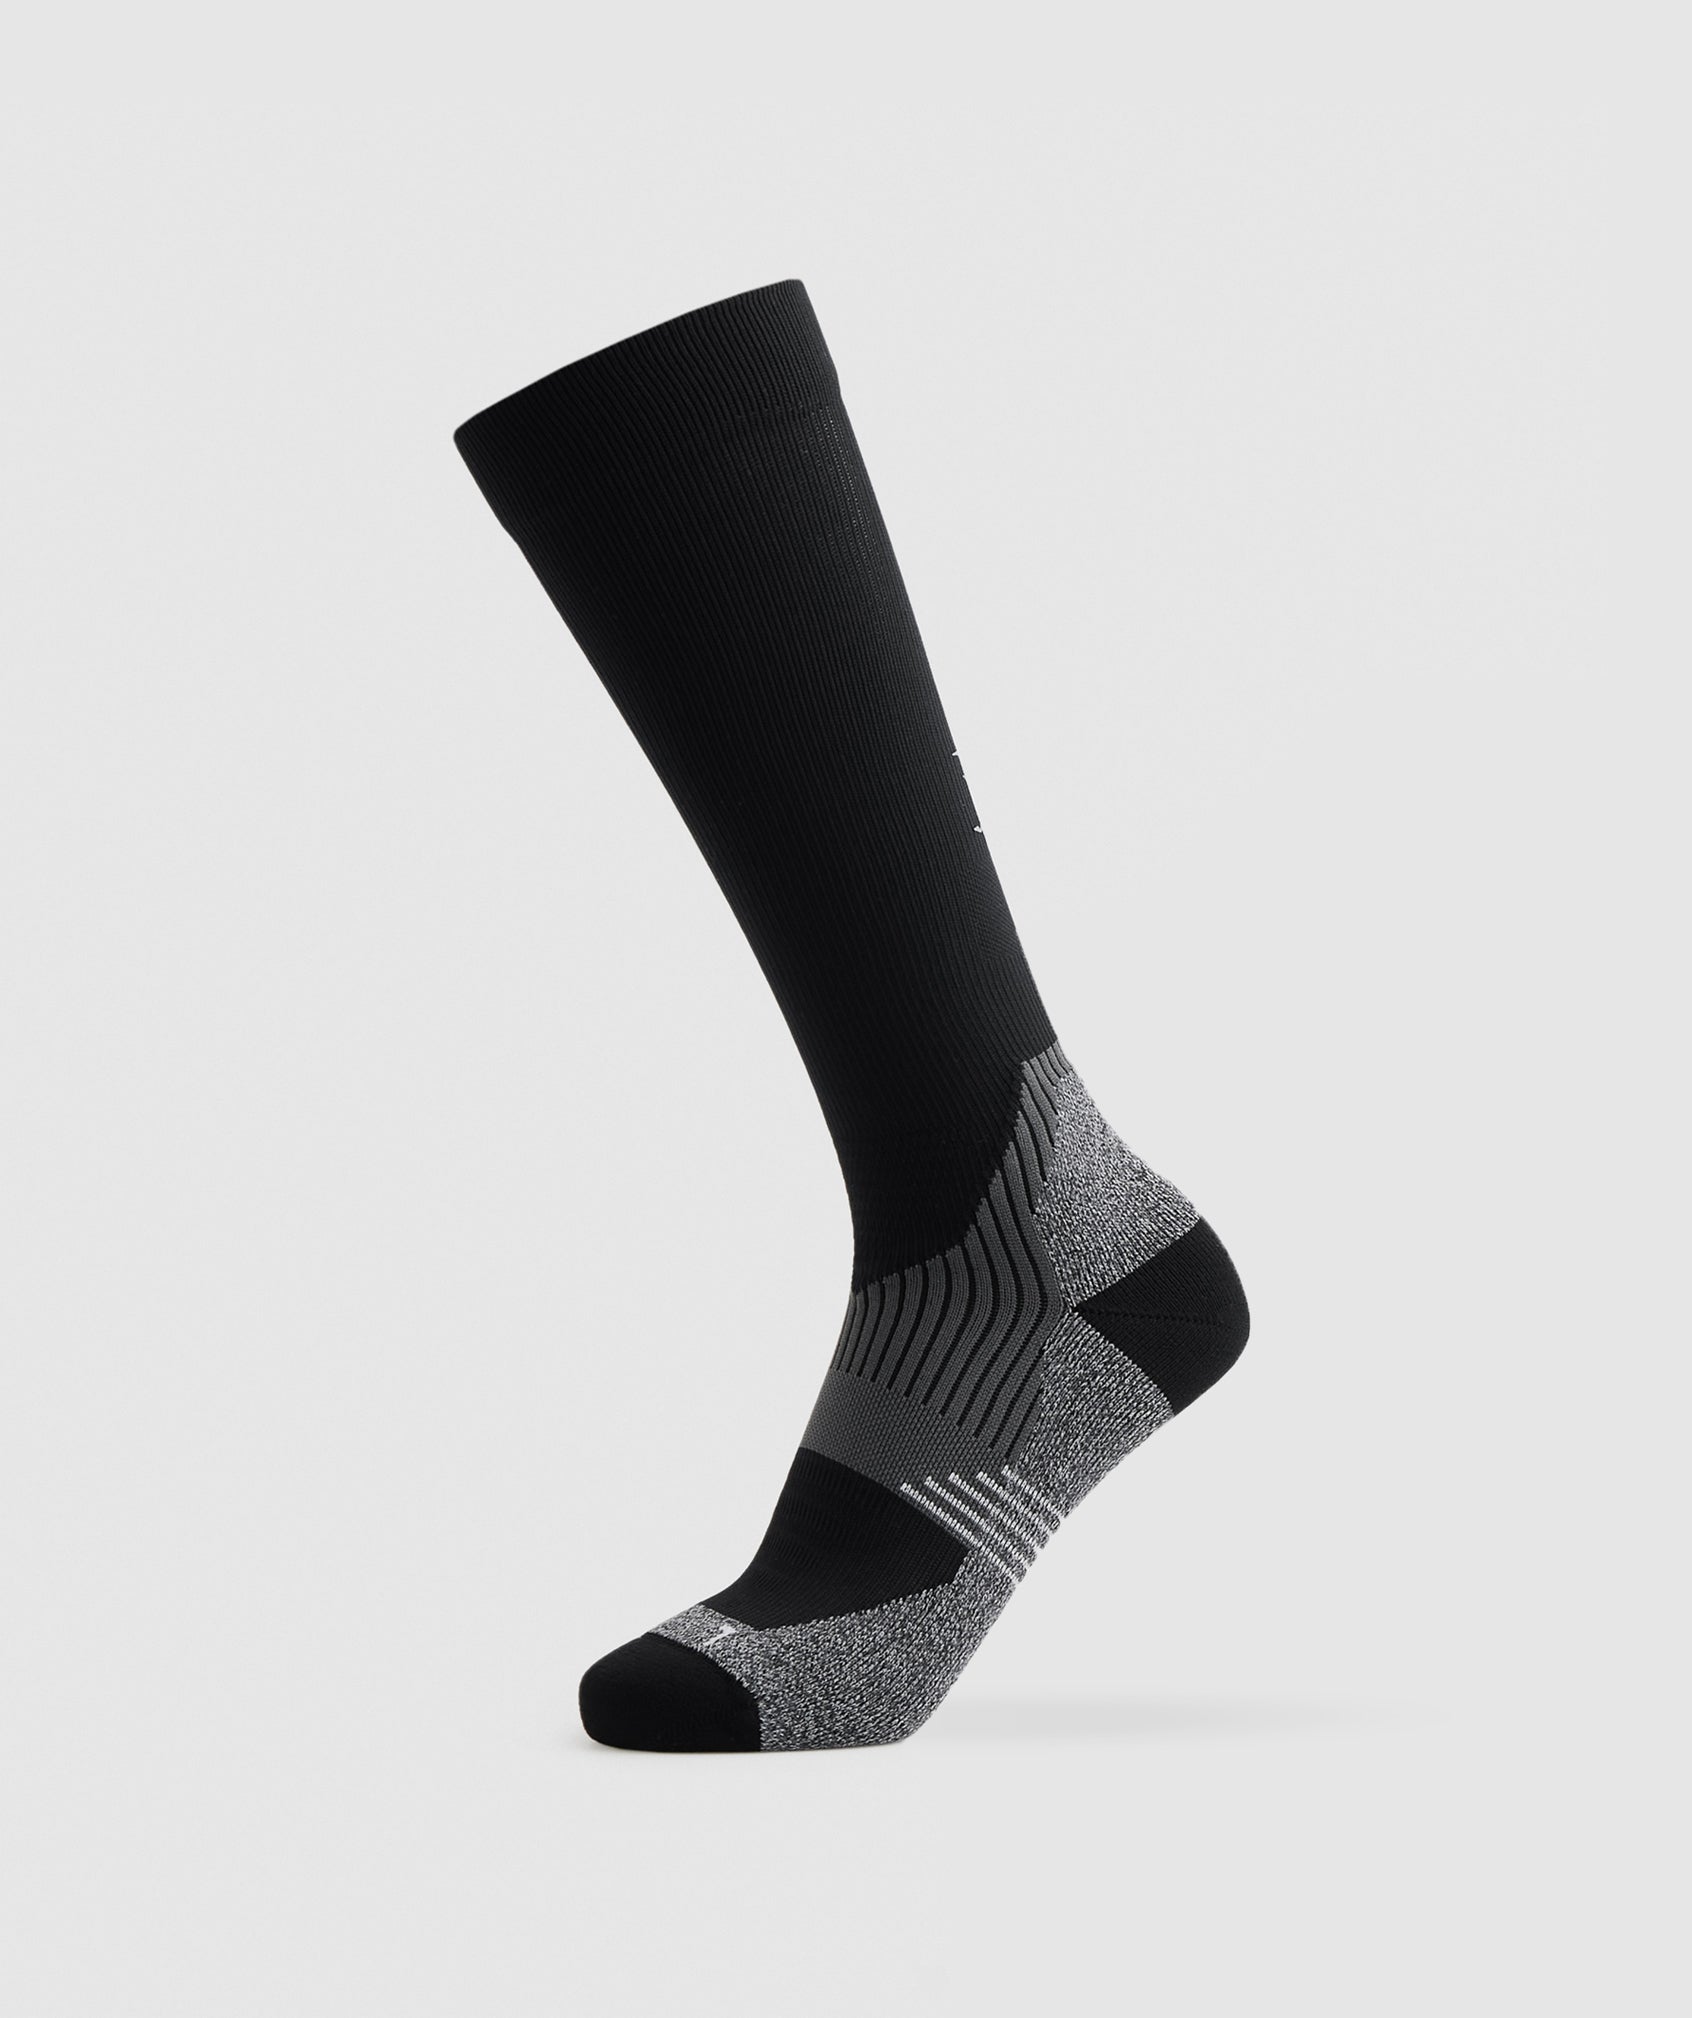 Long Performance Socks in Black